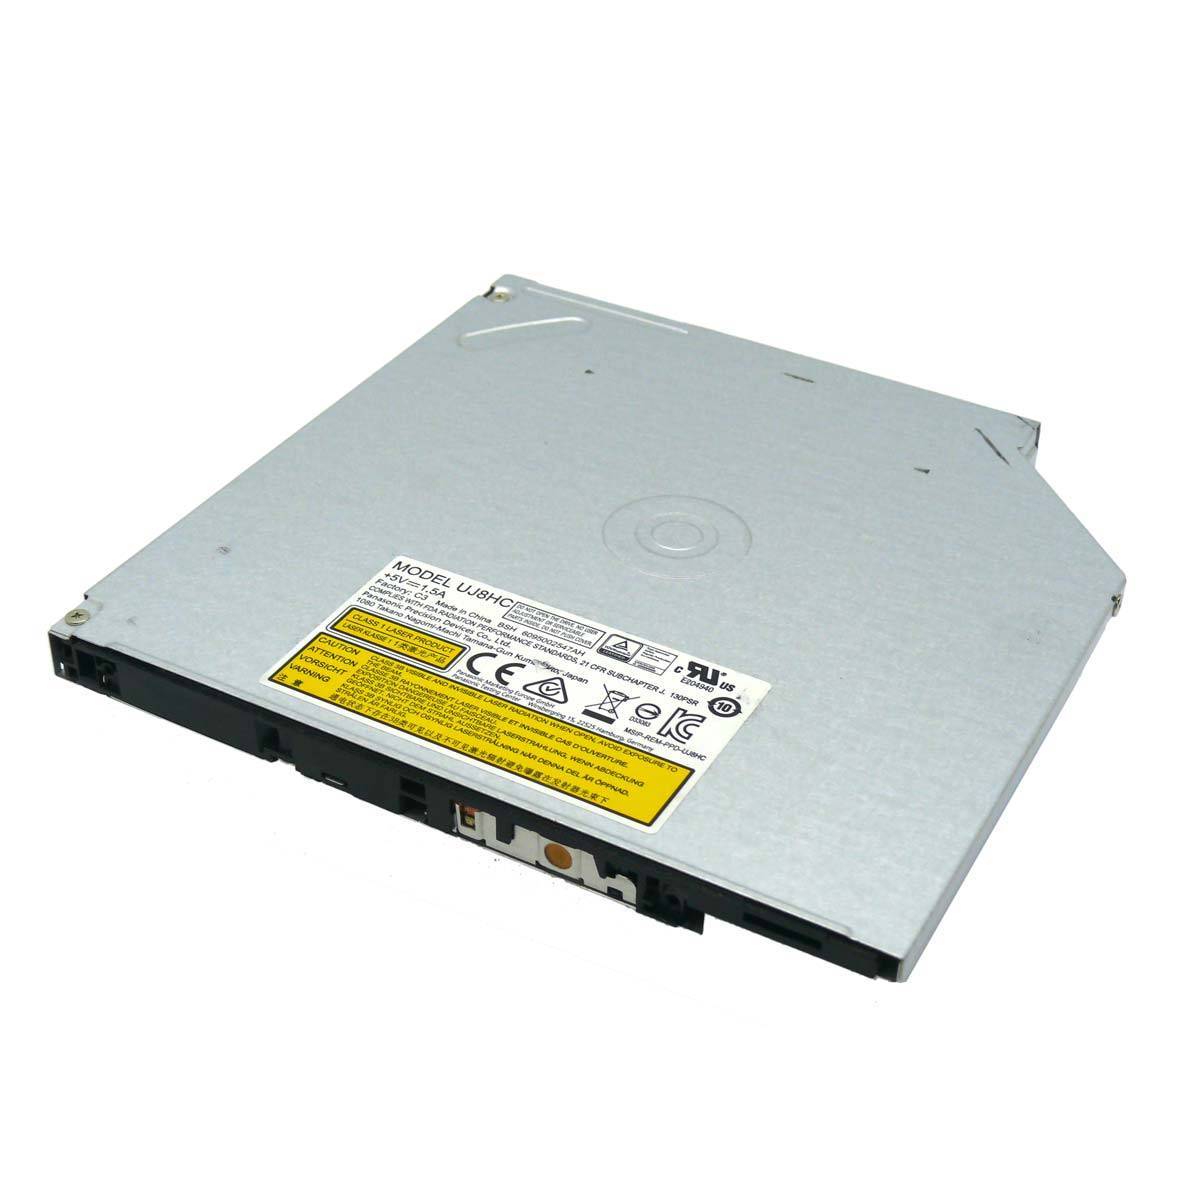 DVD-Brenner Panasonic UJ8HC slim SATA 9mm gebraucht